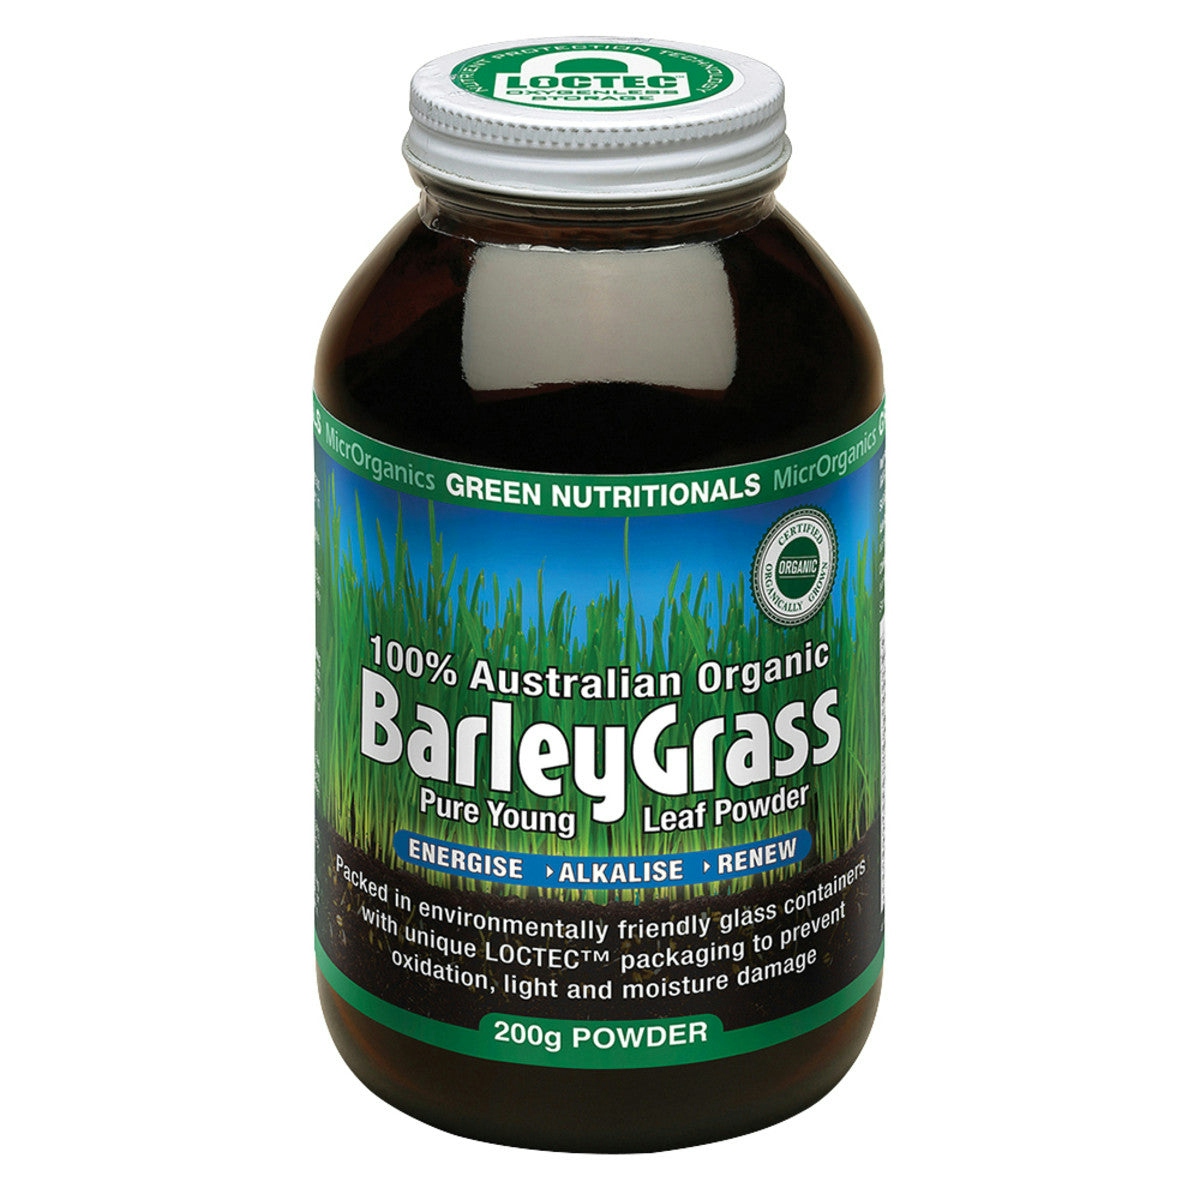 image of MicrOrganics Green Nutritionals Organic Australian BarleyGrass 200g Powder on white background